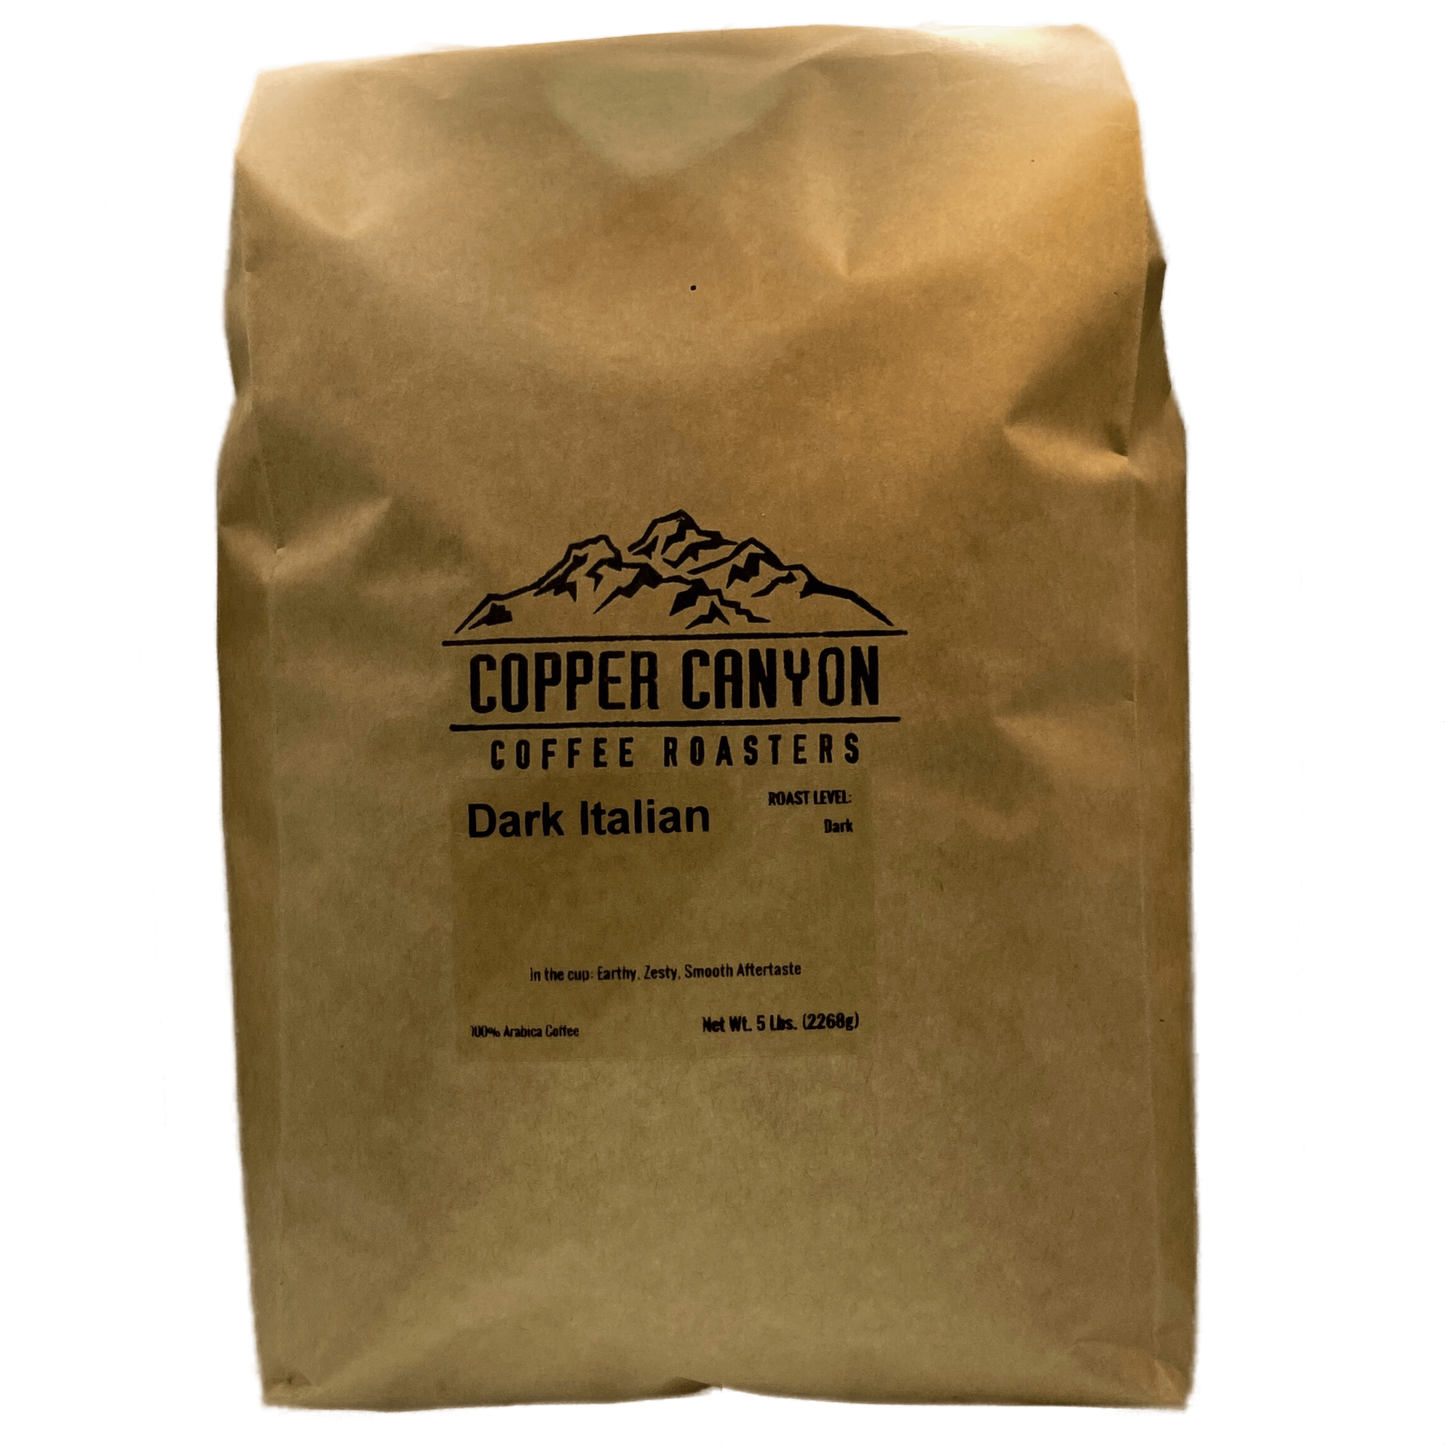 5 pound bag of Dark Italian dark roast coffee by Copper Canyon